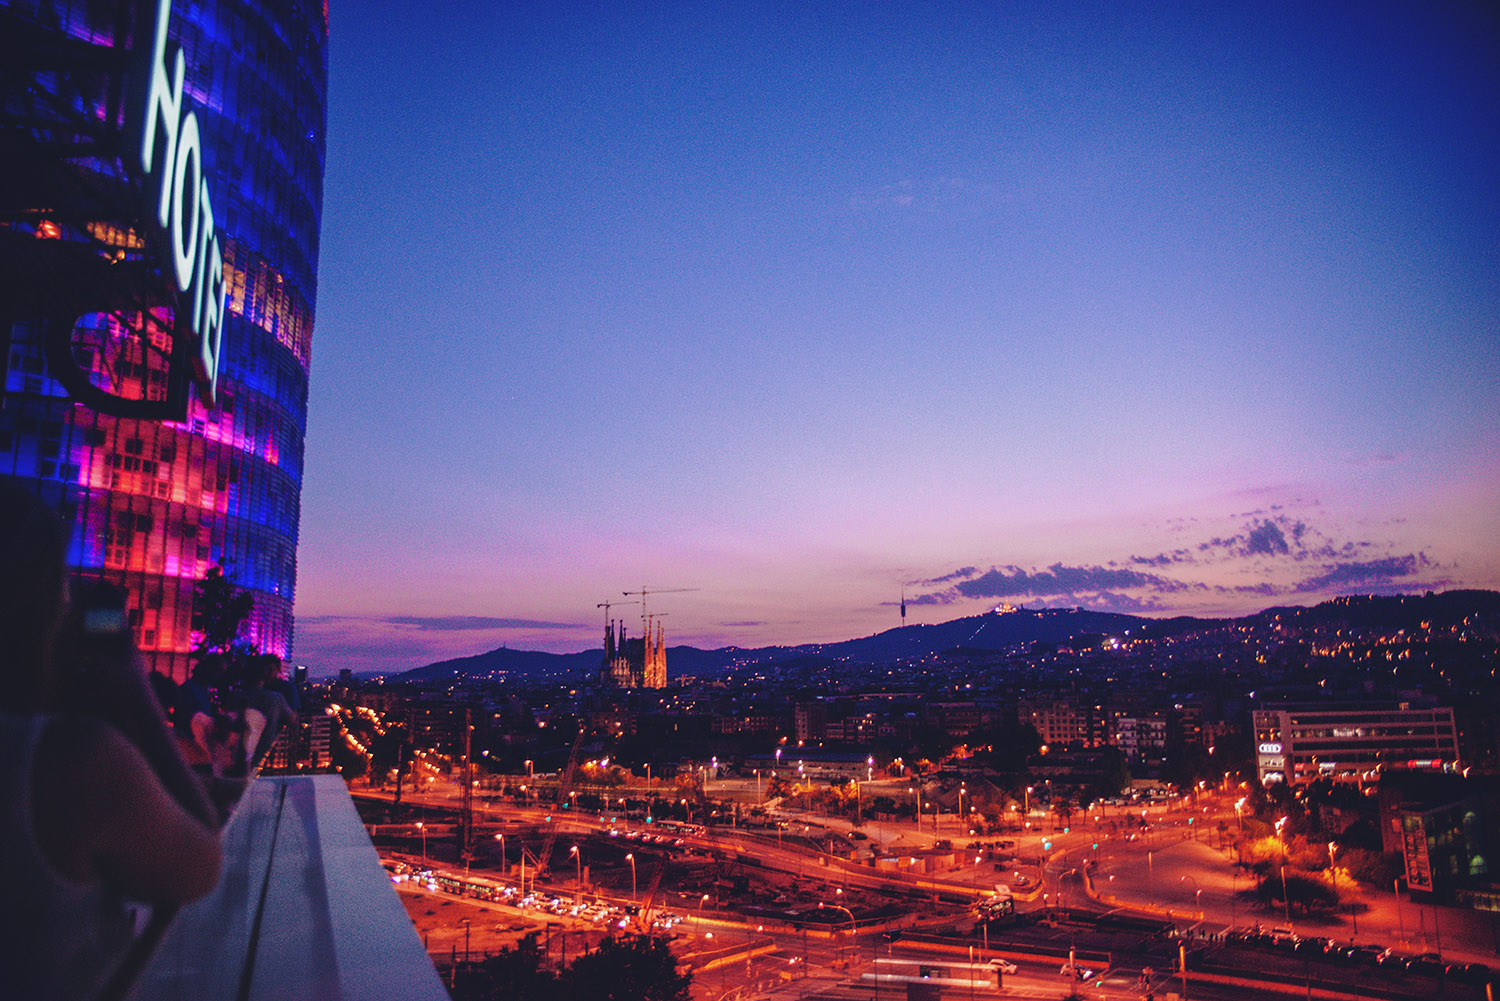 View from Hotel Silken Diagonal Barcelona